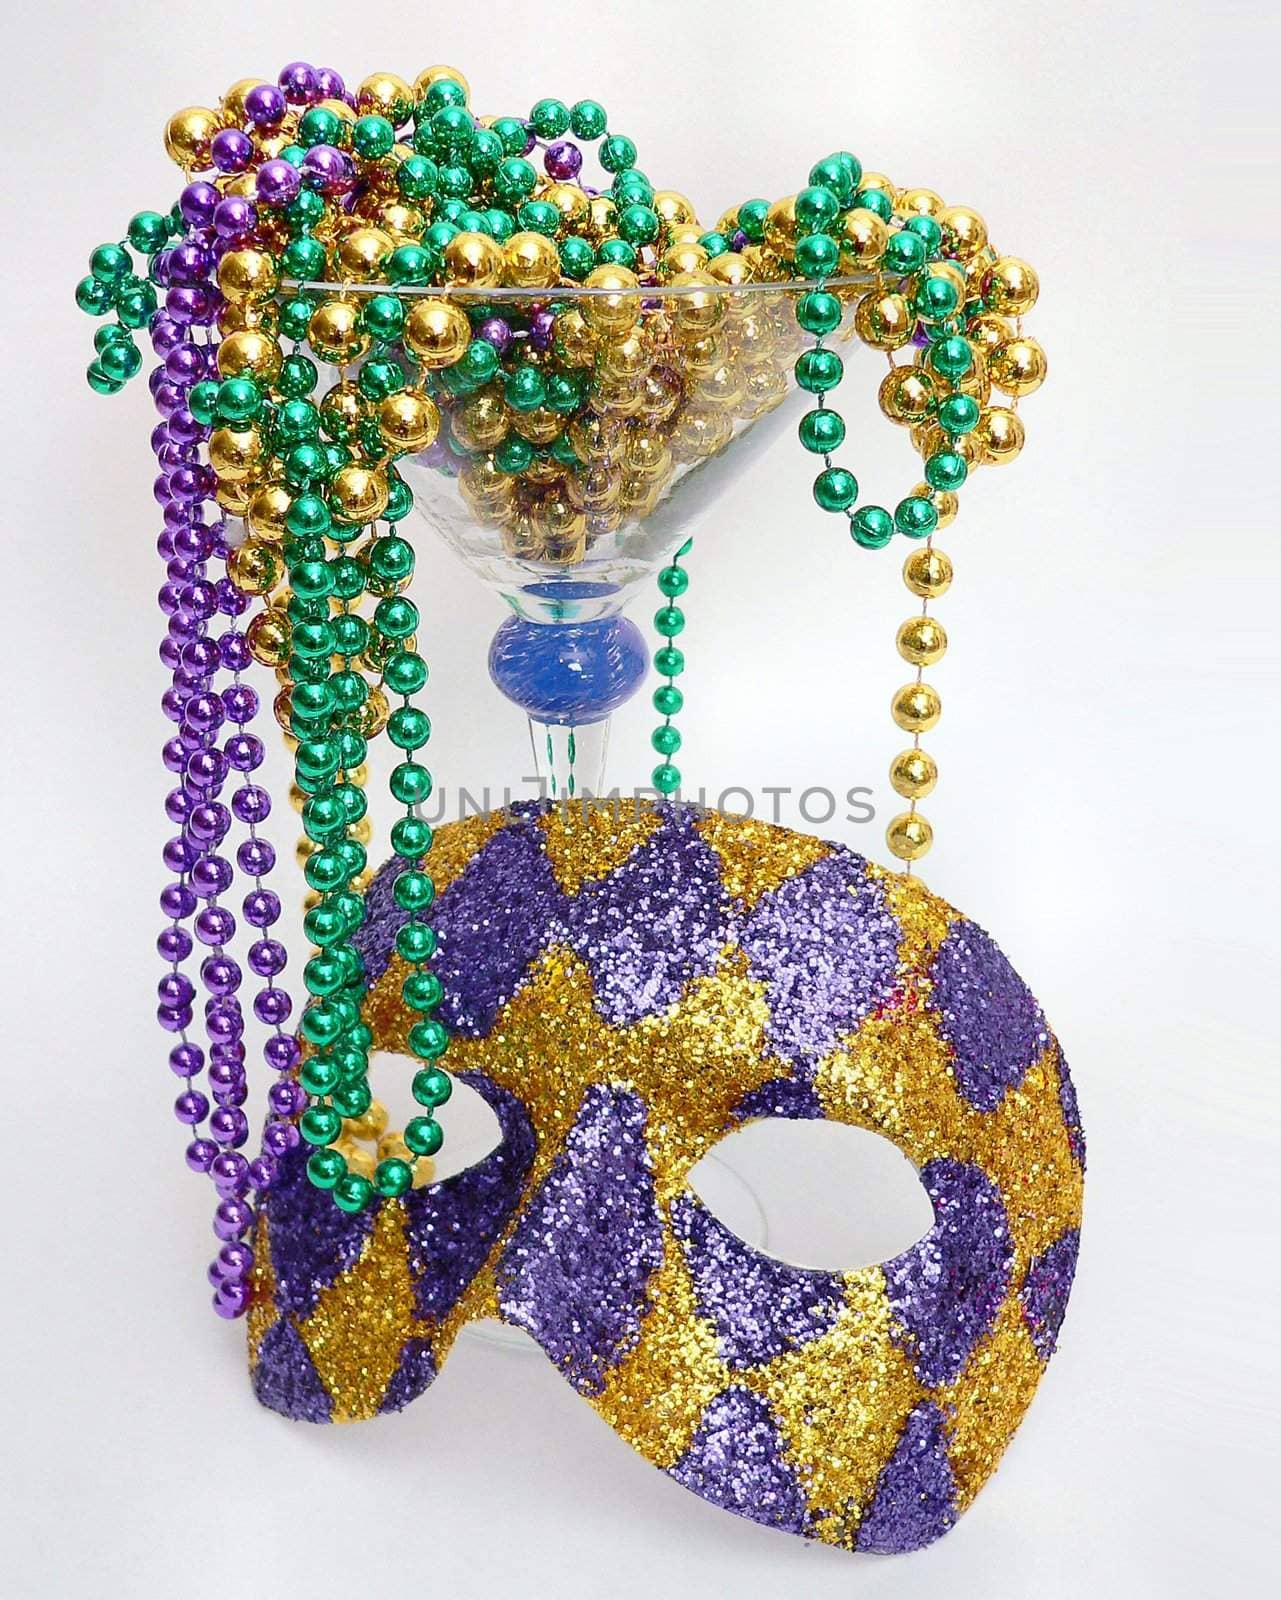 Harlequin mask and mardis gras beads